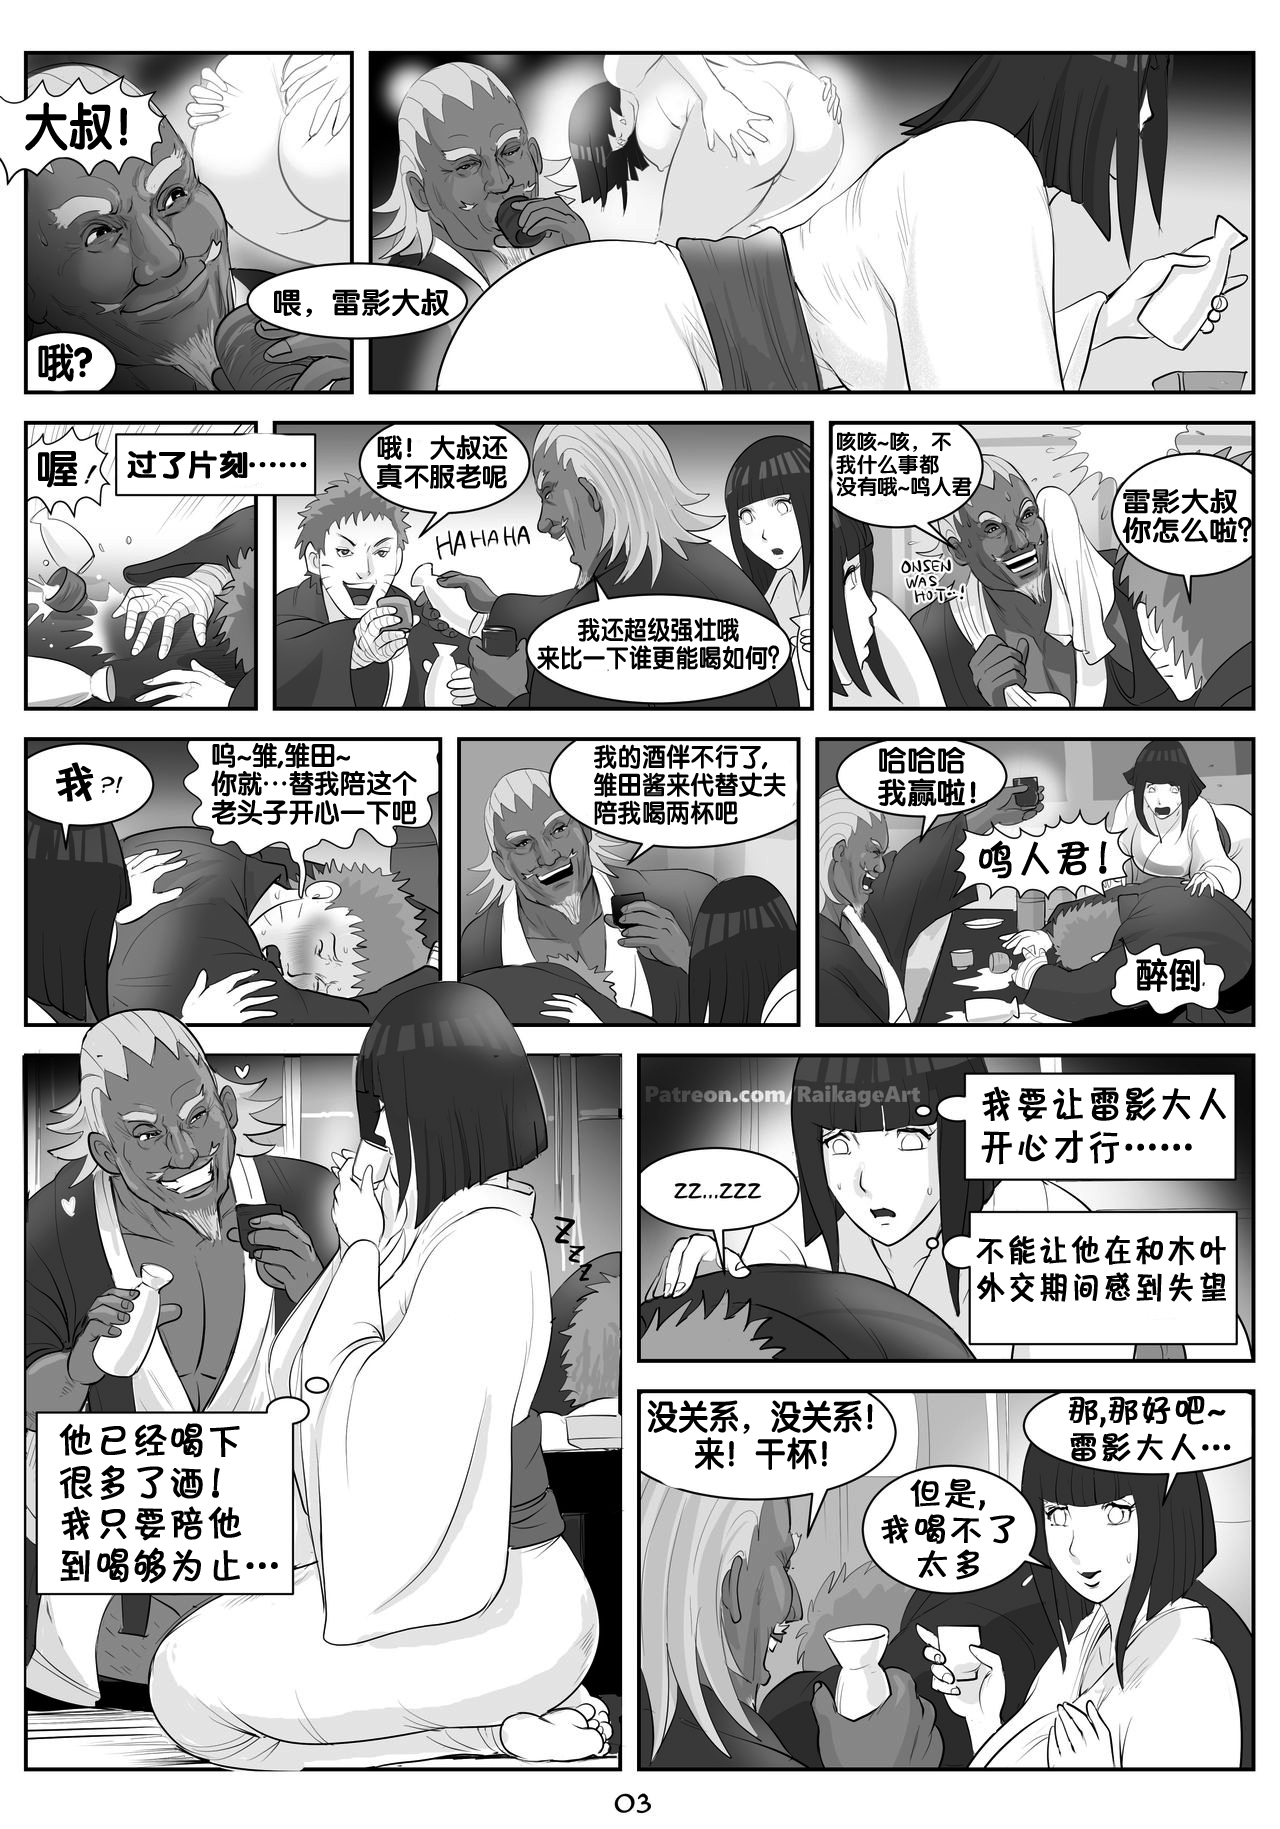 Affair hidden in the leaves manga